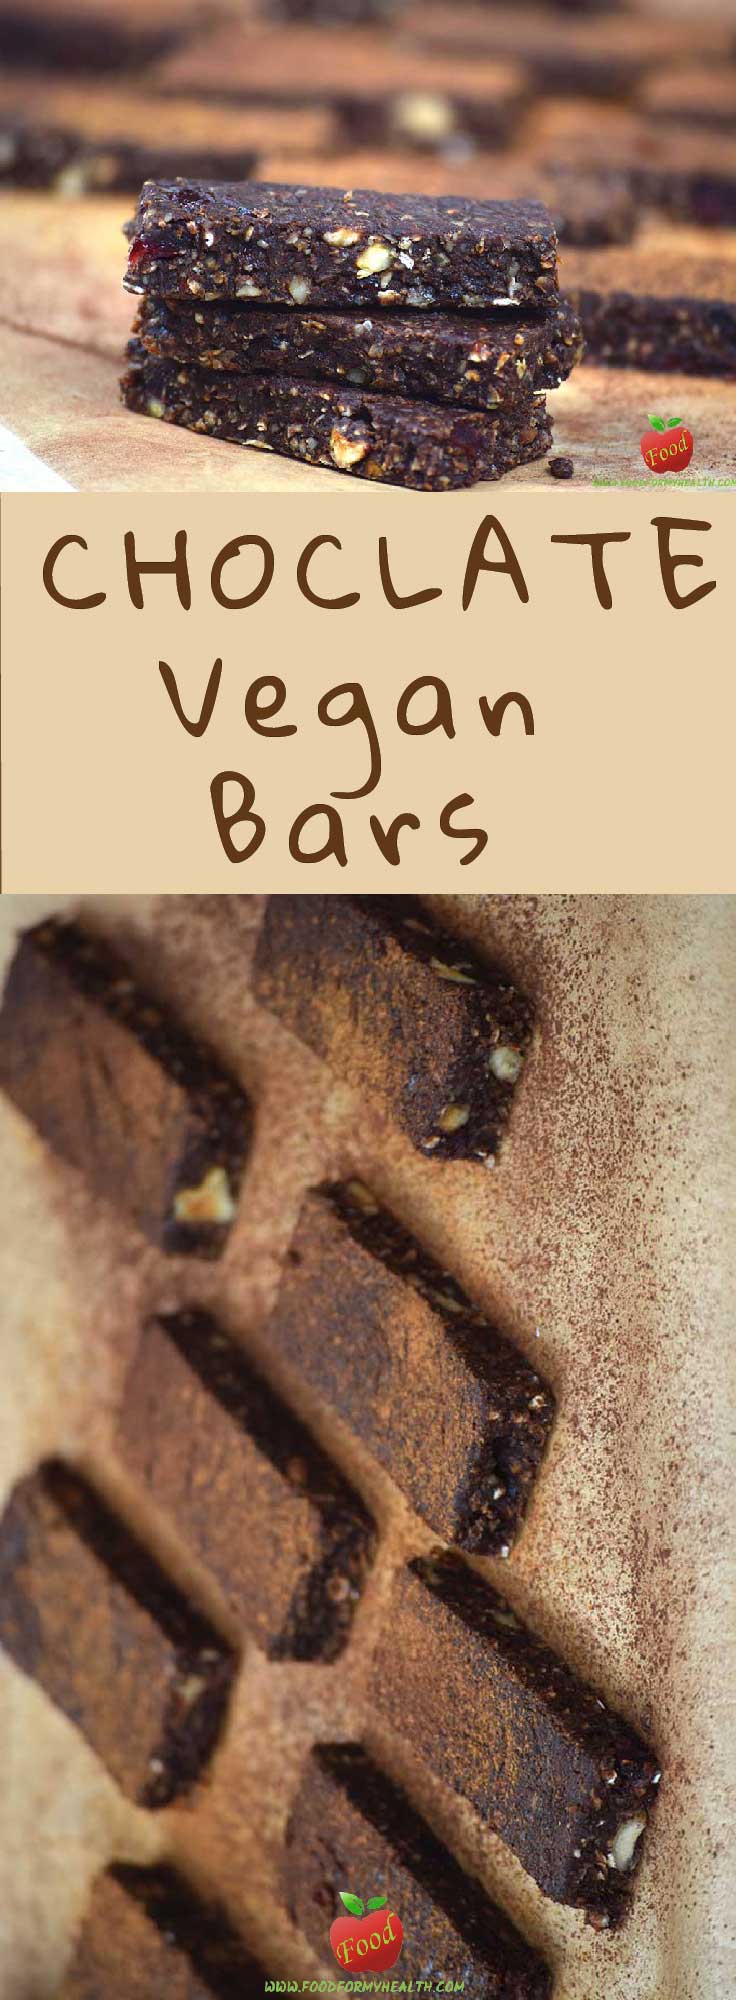 Chocolate vegan bars